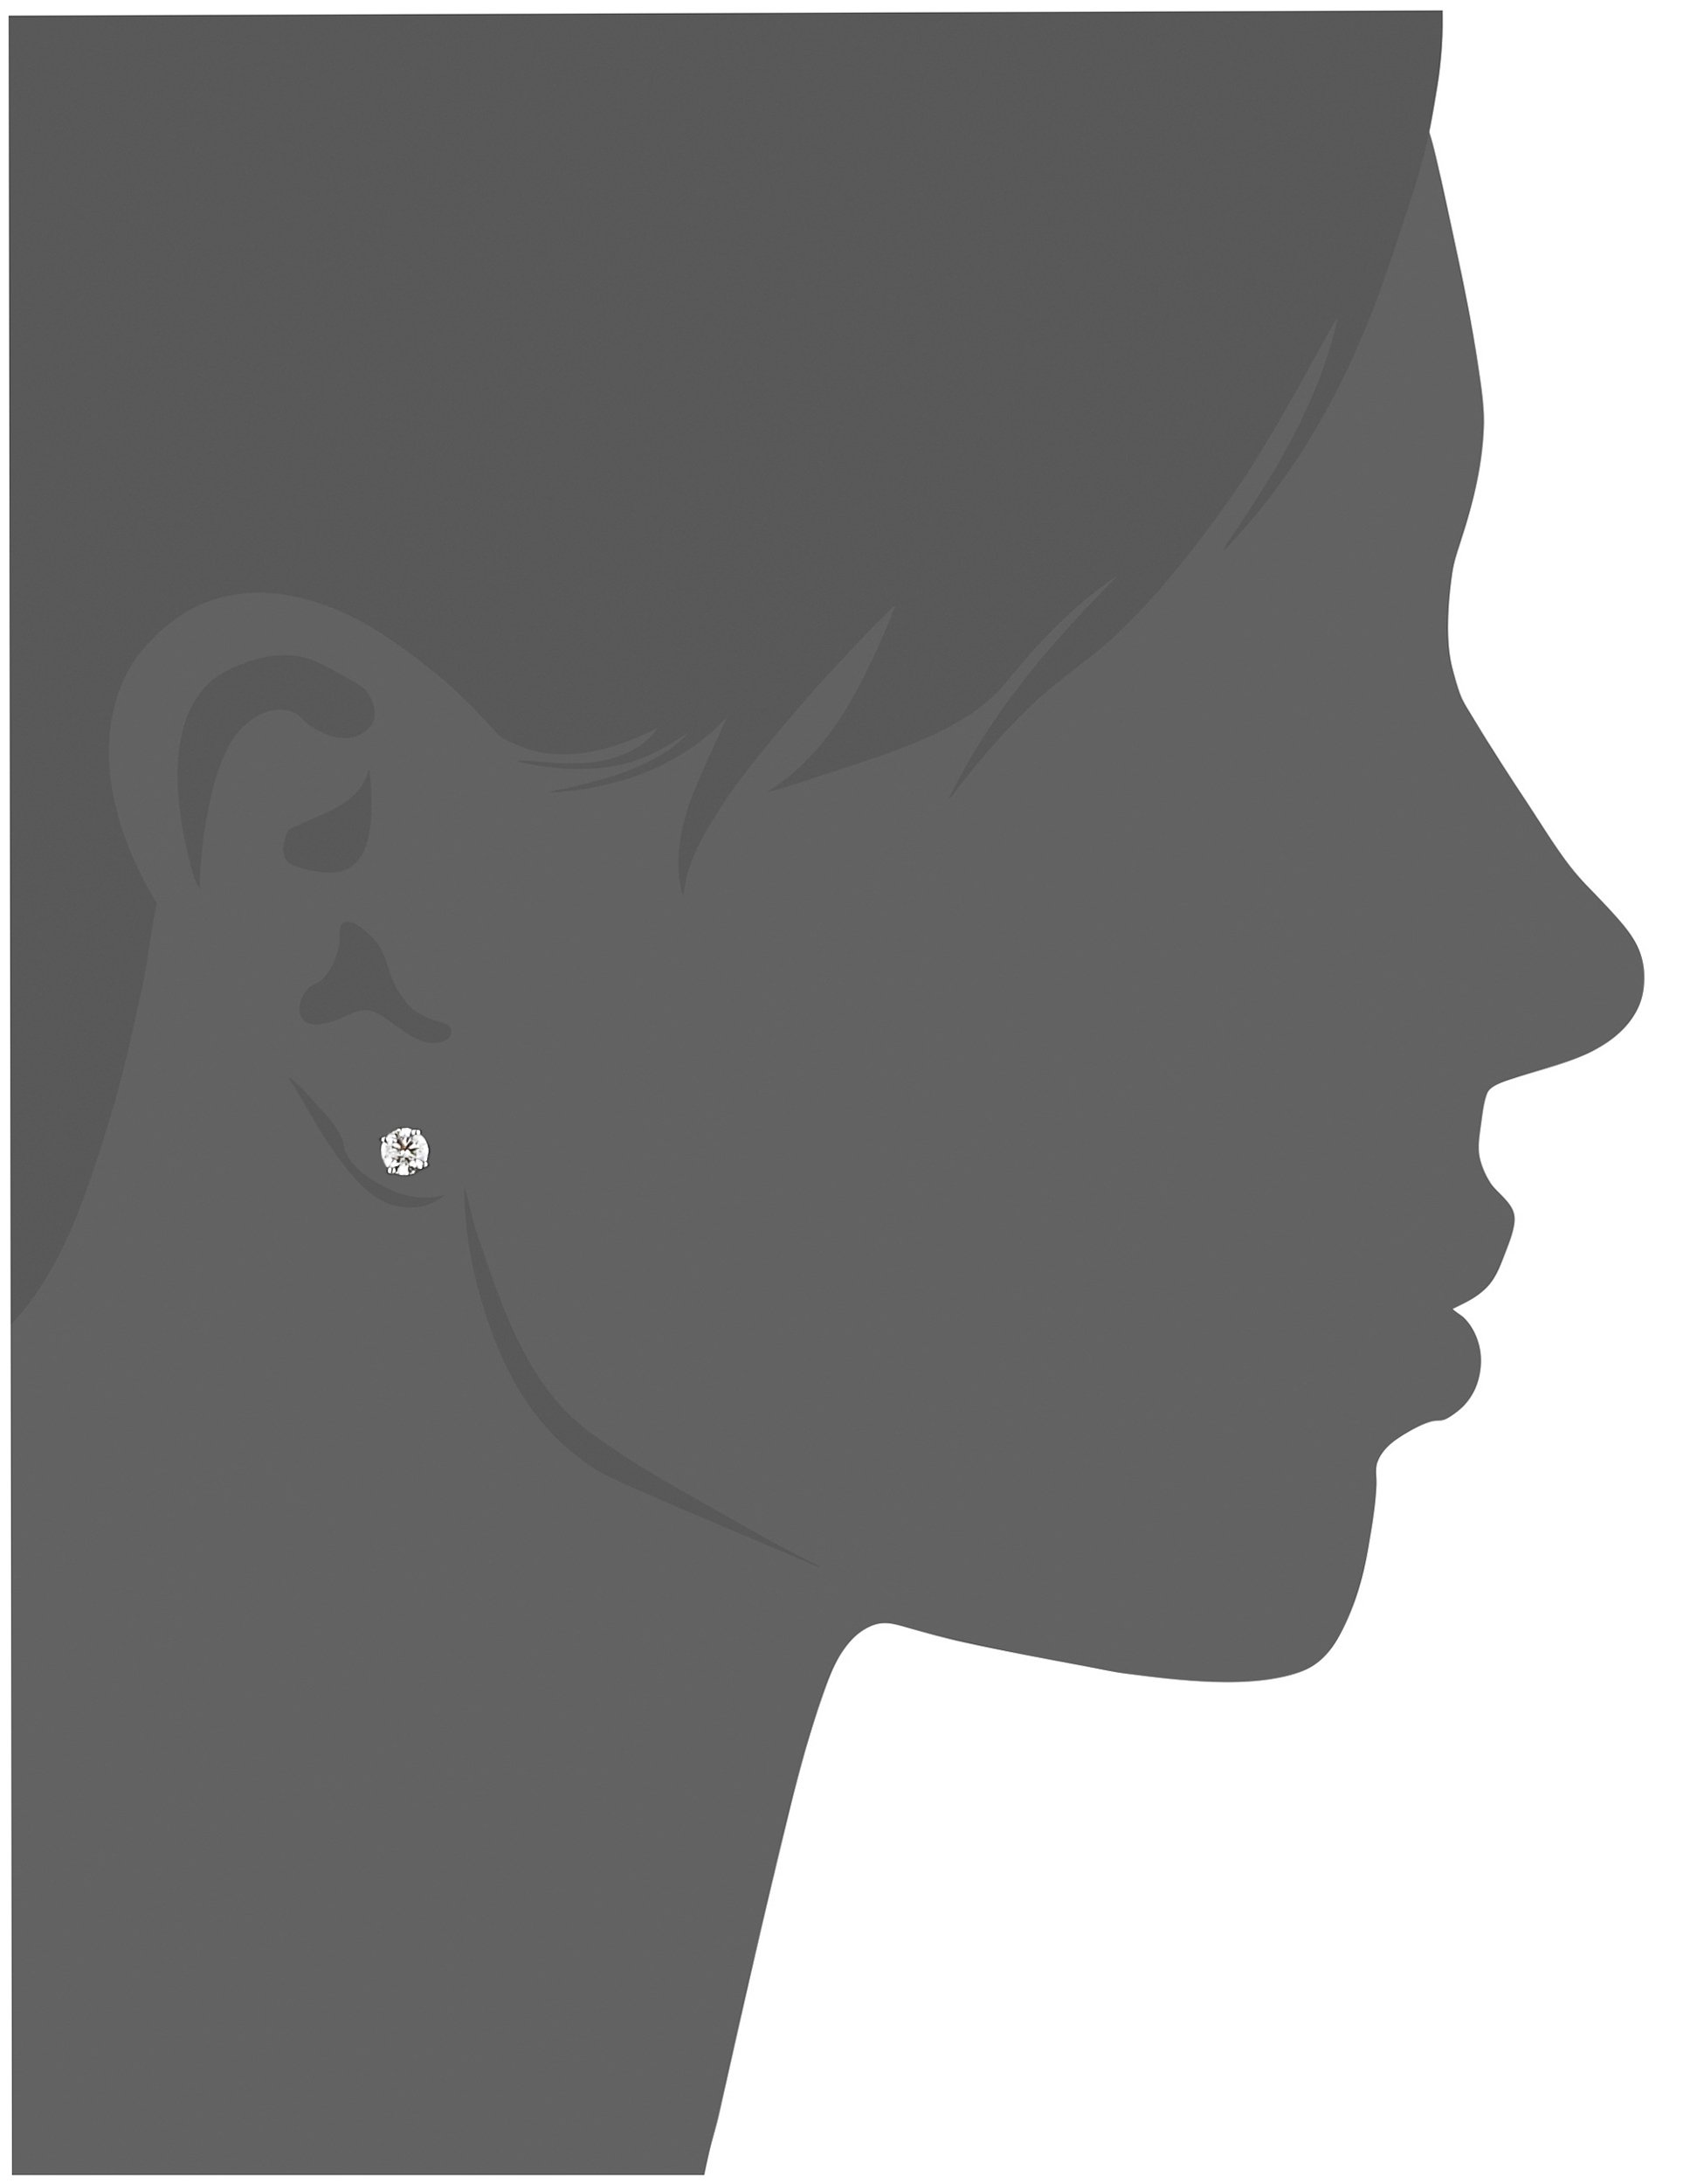 Amazon Collection IGI Certified Platinum Round-Cut Diamond Stud Earrings